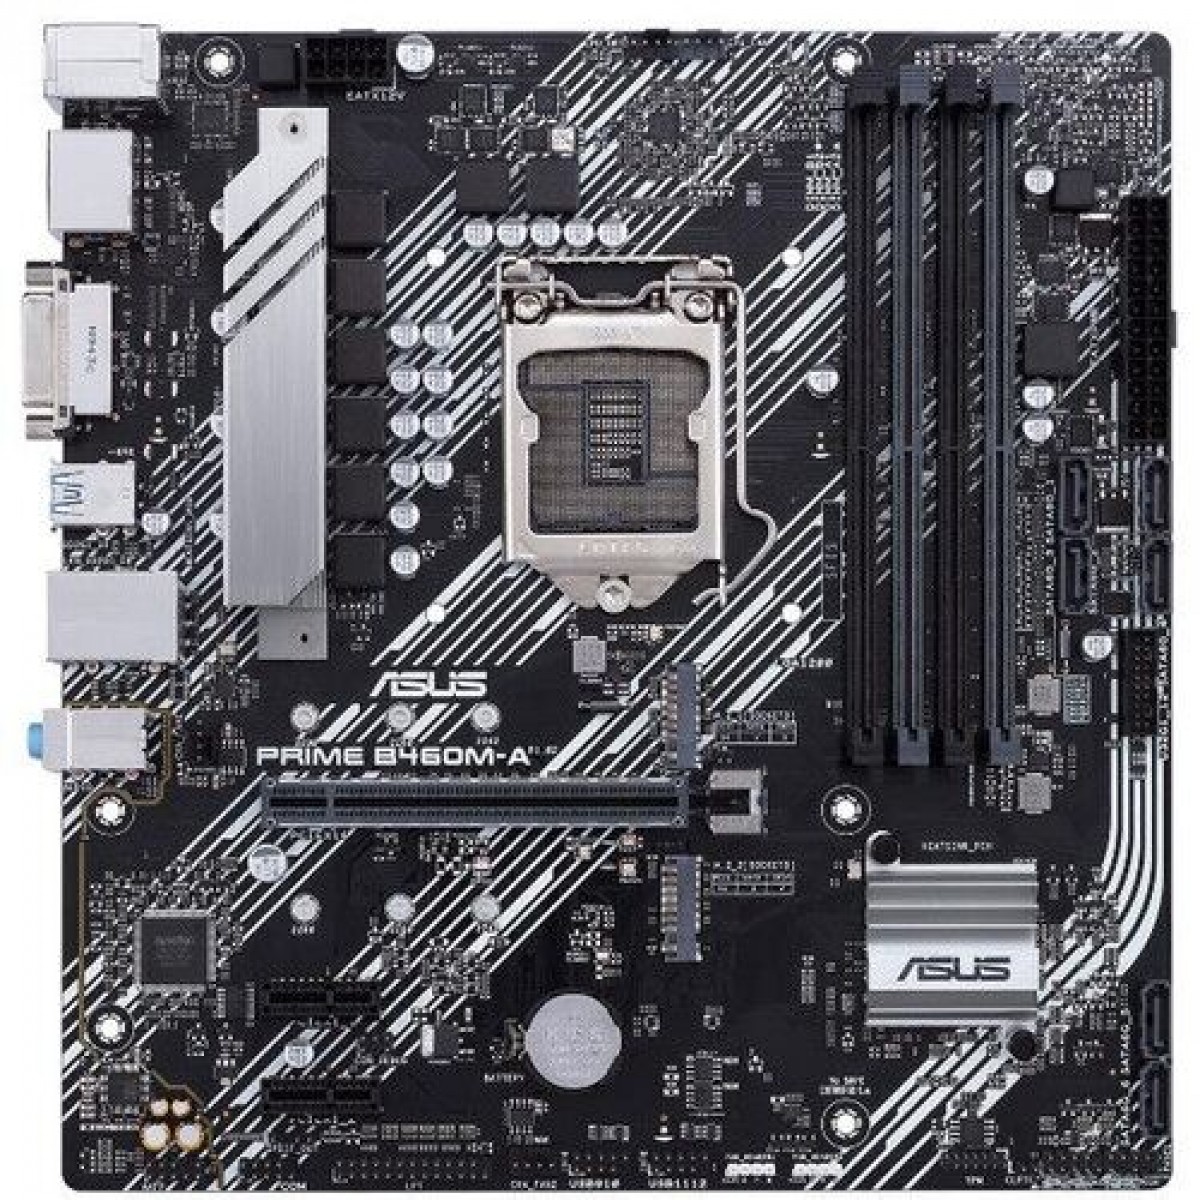 Placa Mãe Asus Prime B460M-A, Chipset B460, Intel LGA 1200, mATX, DDR4